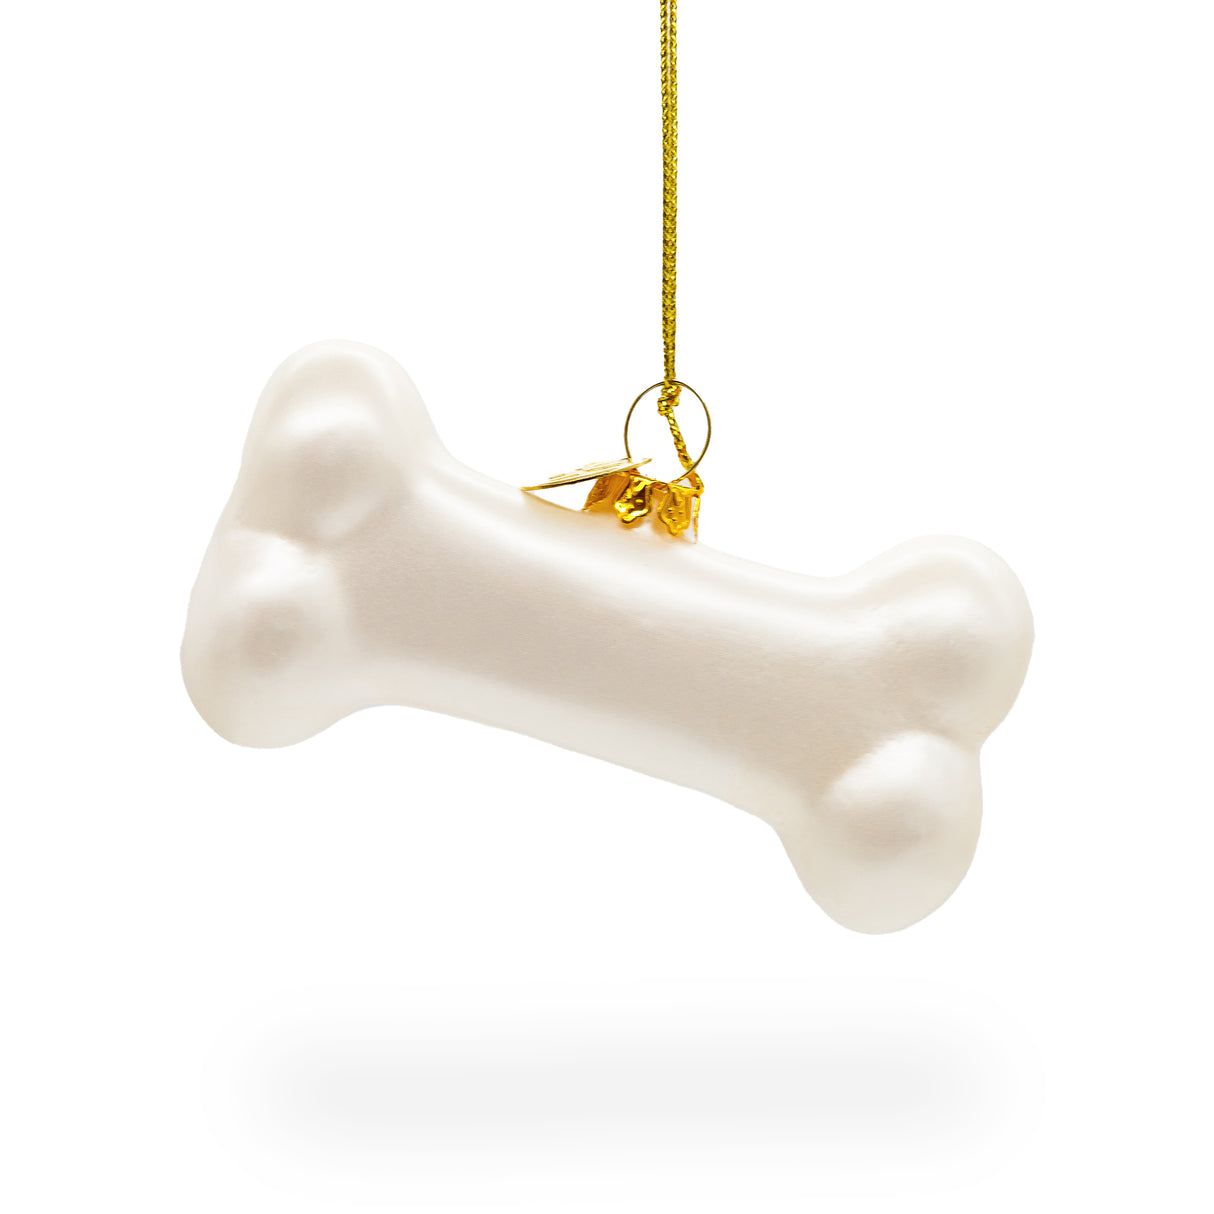 Charming White Dog Bone - Blown Glass Christmas Ornament in White color,  shape